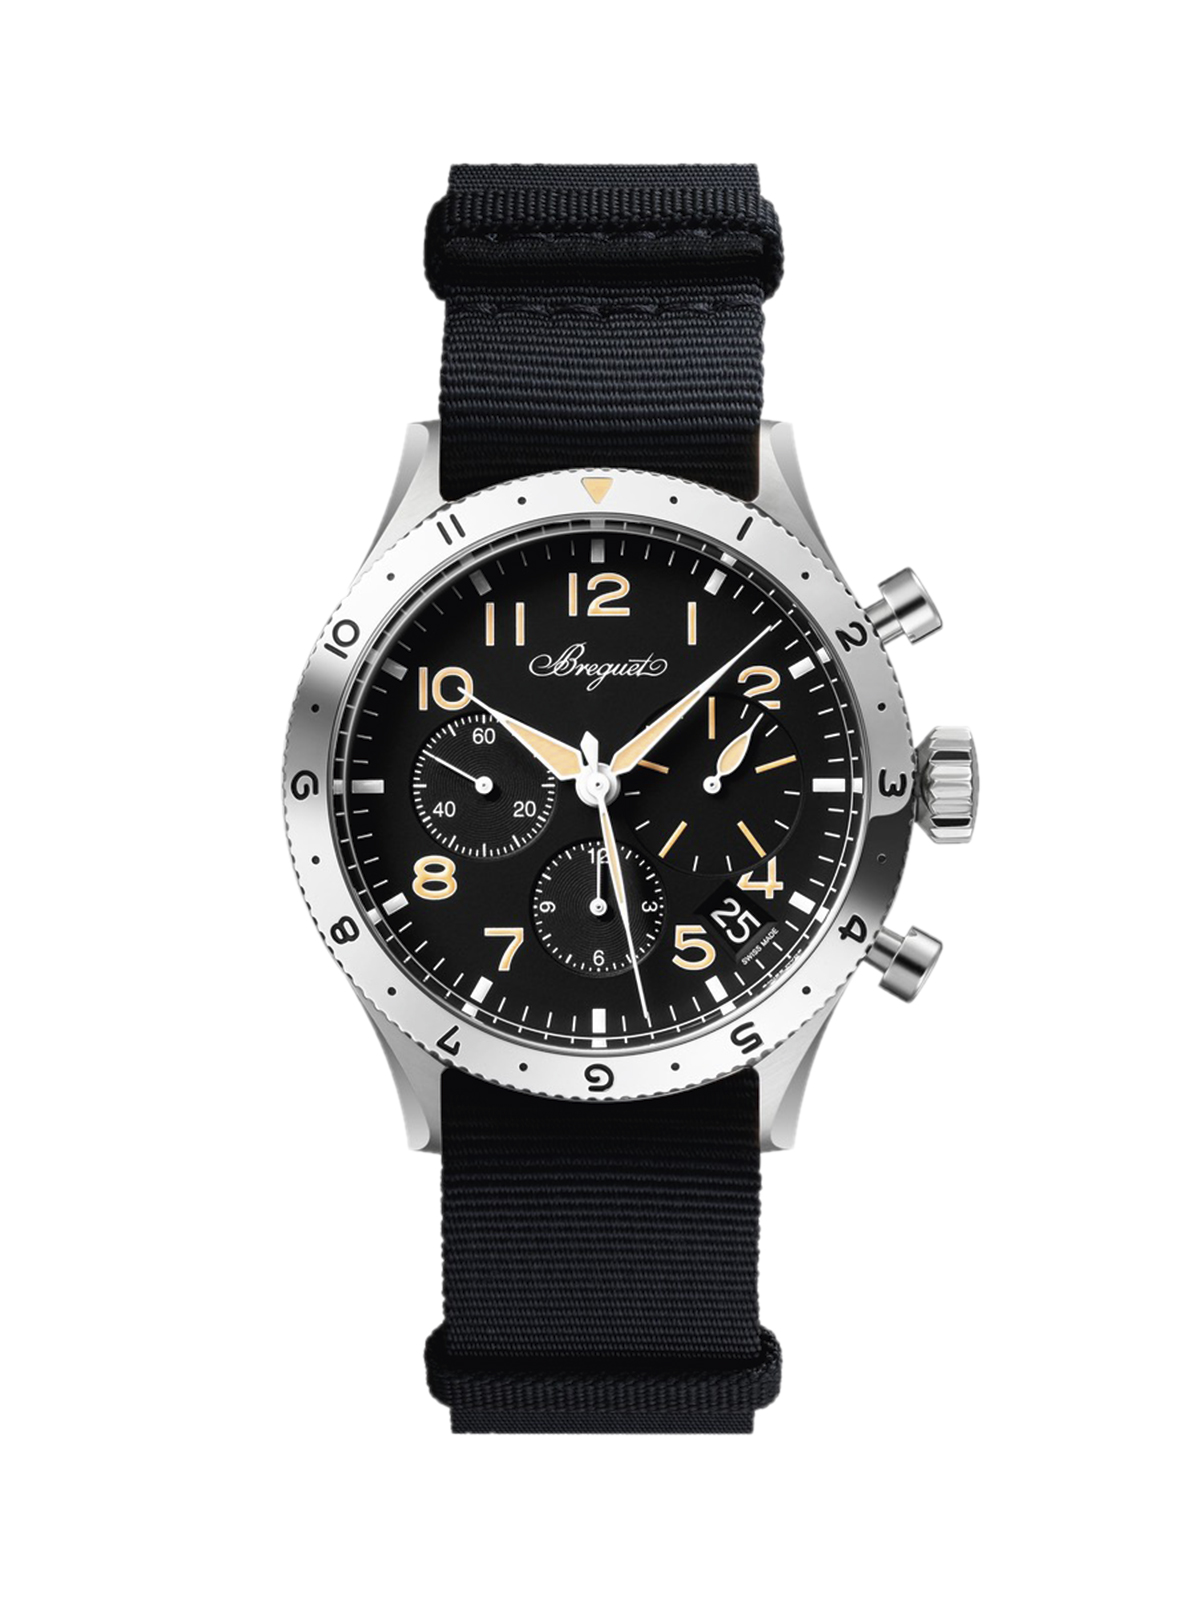 Vintage Watch Models - Breguet Type XX